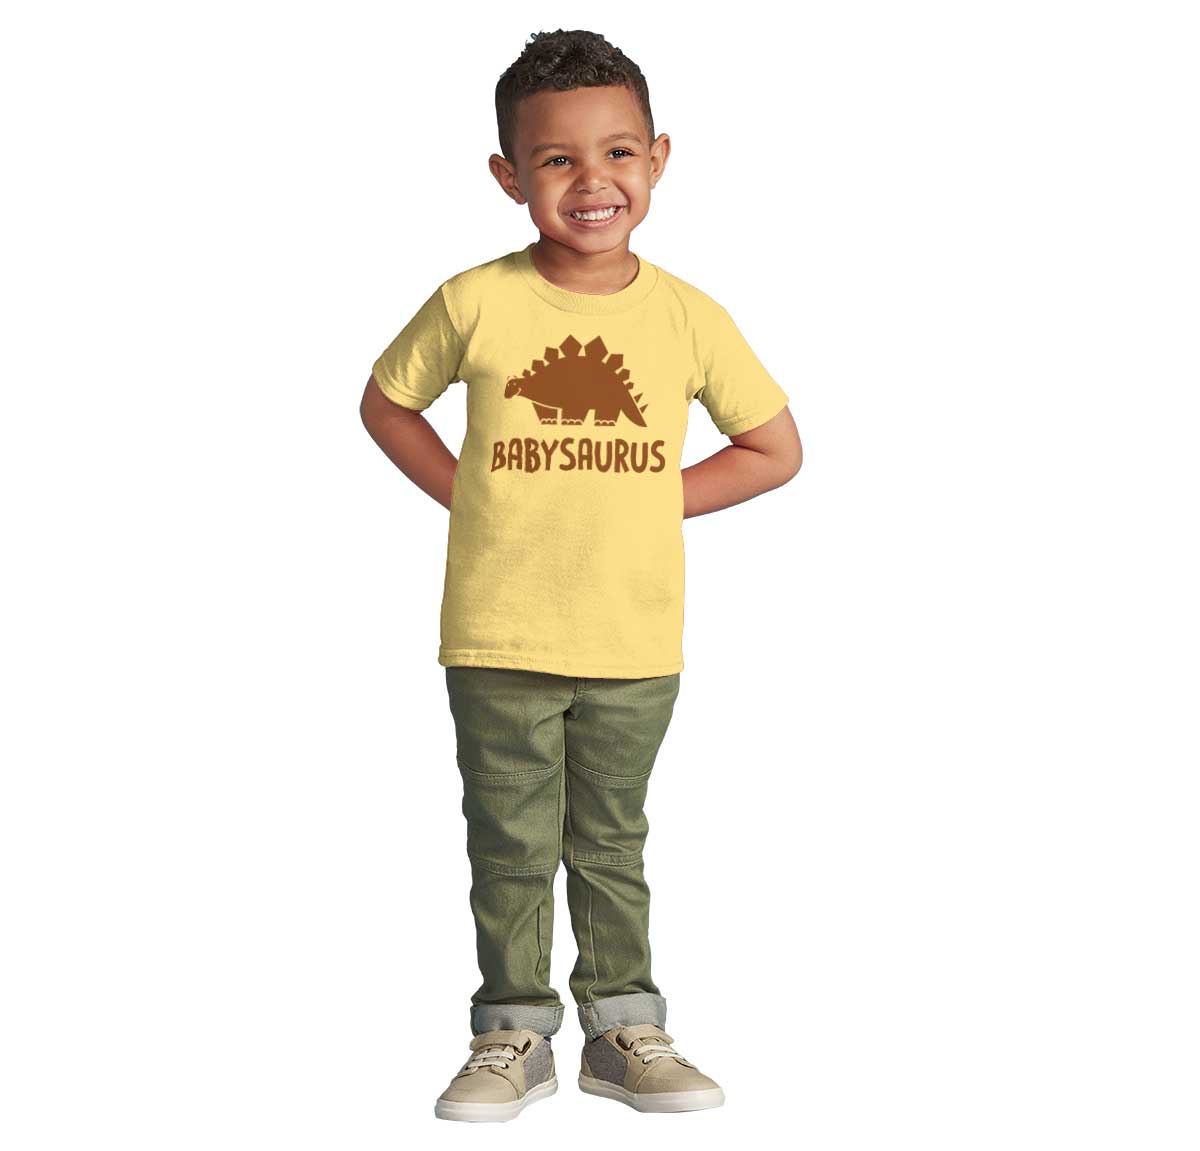 Babysaurus Infant Toddler T-Shirt | Brisco Baby